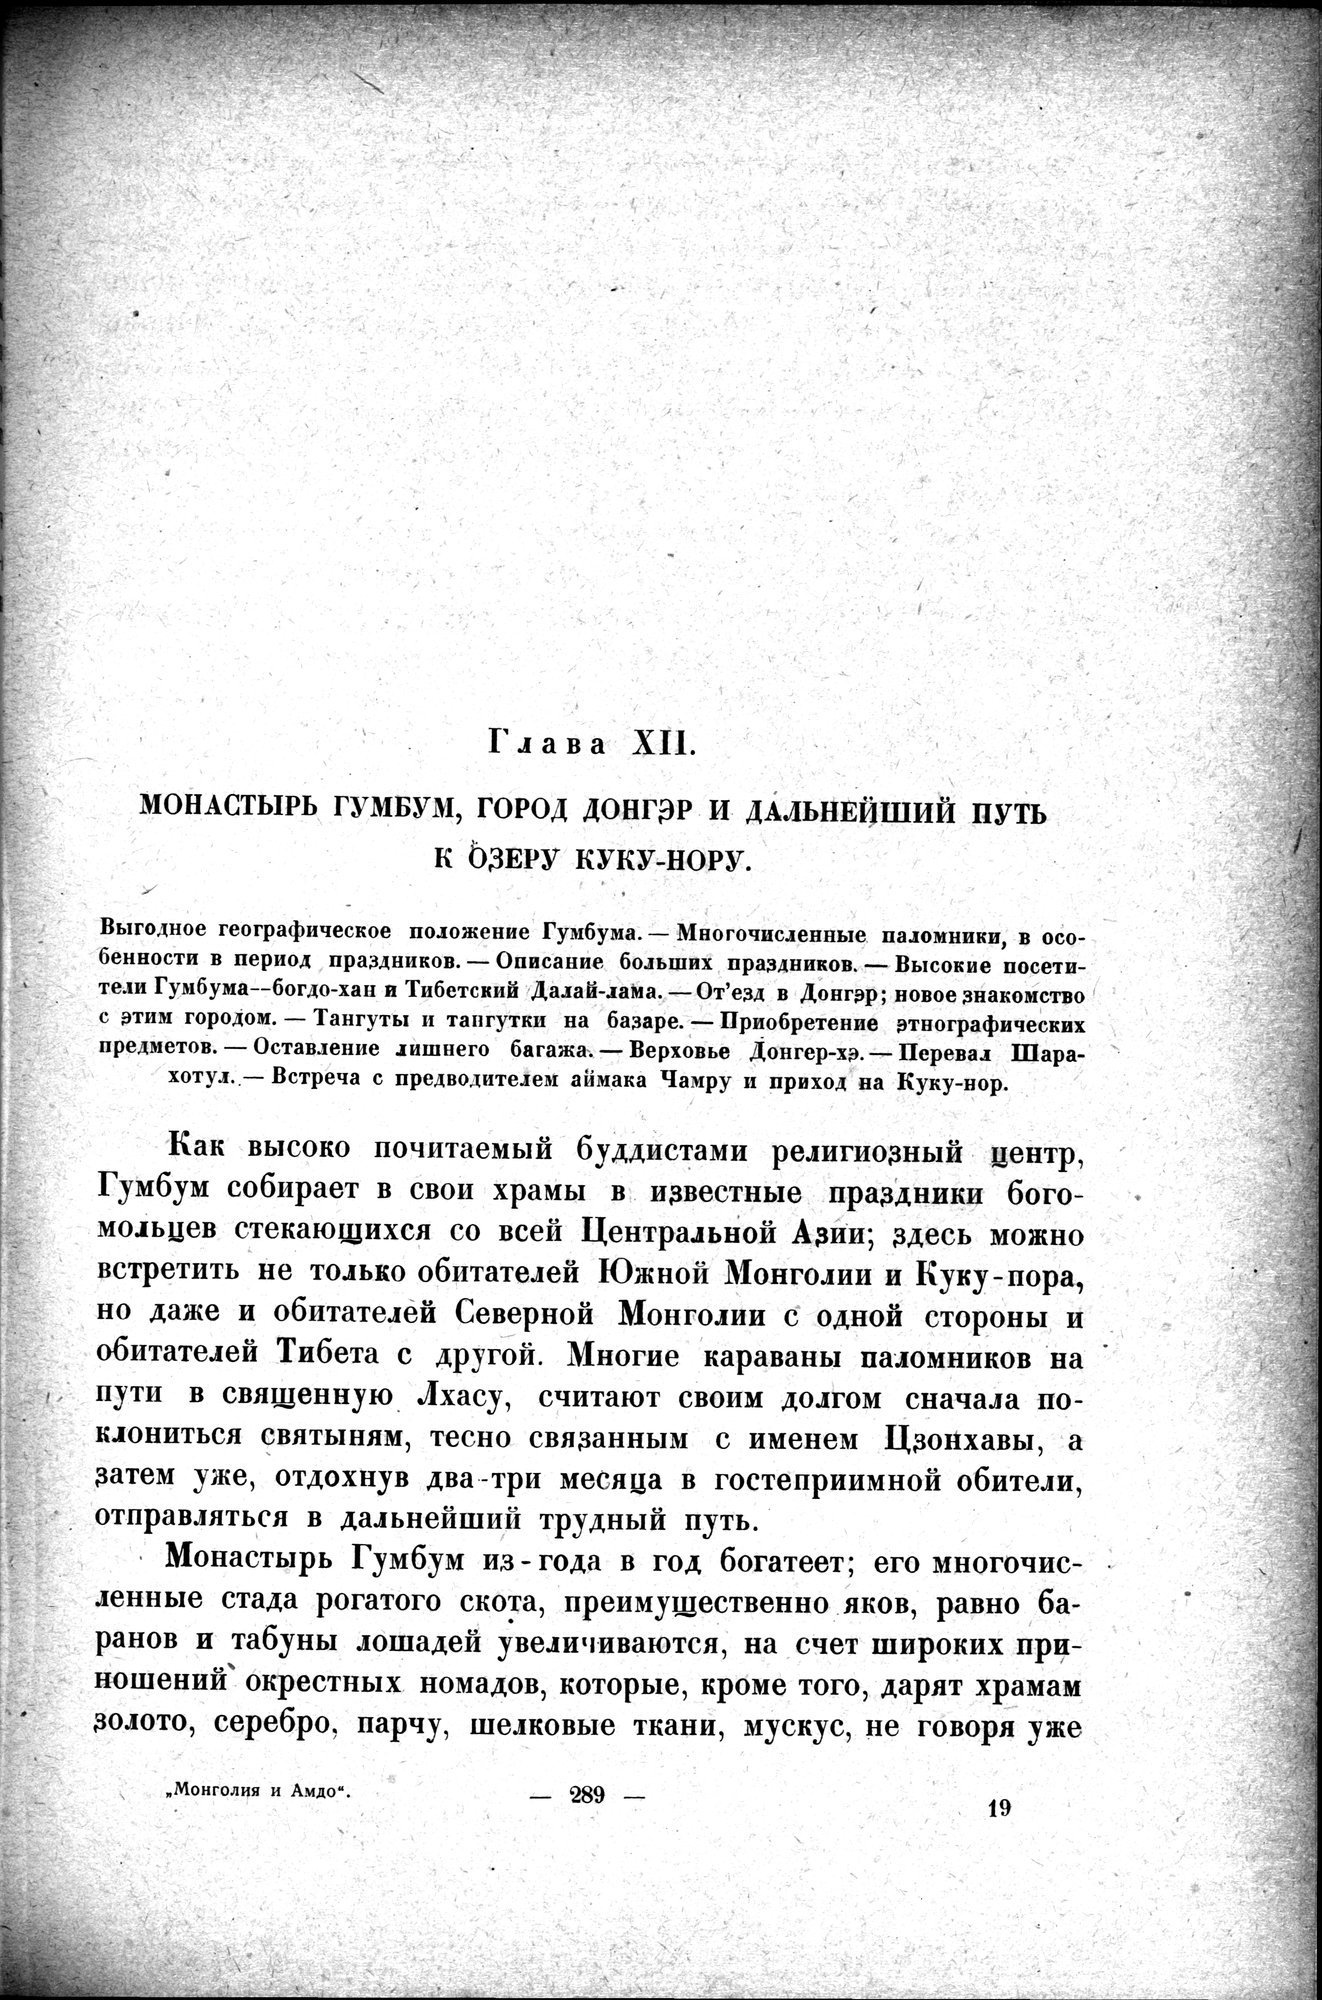 Mongoliya i Amdo i mertby gorod Khara-Khoto : vol.1 / Page 339 (Grayscale High Resolution Image)